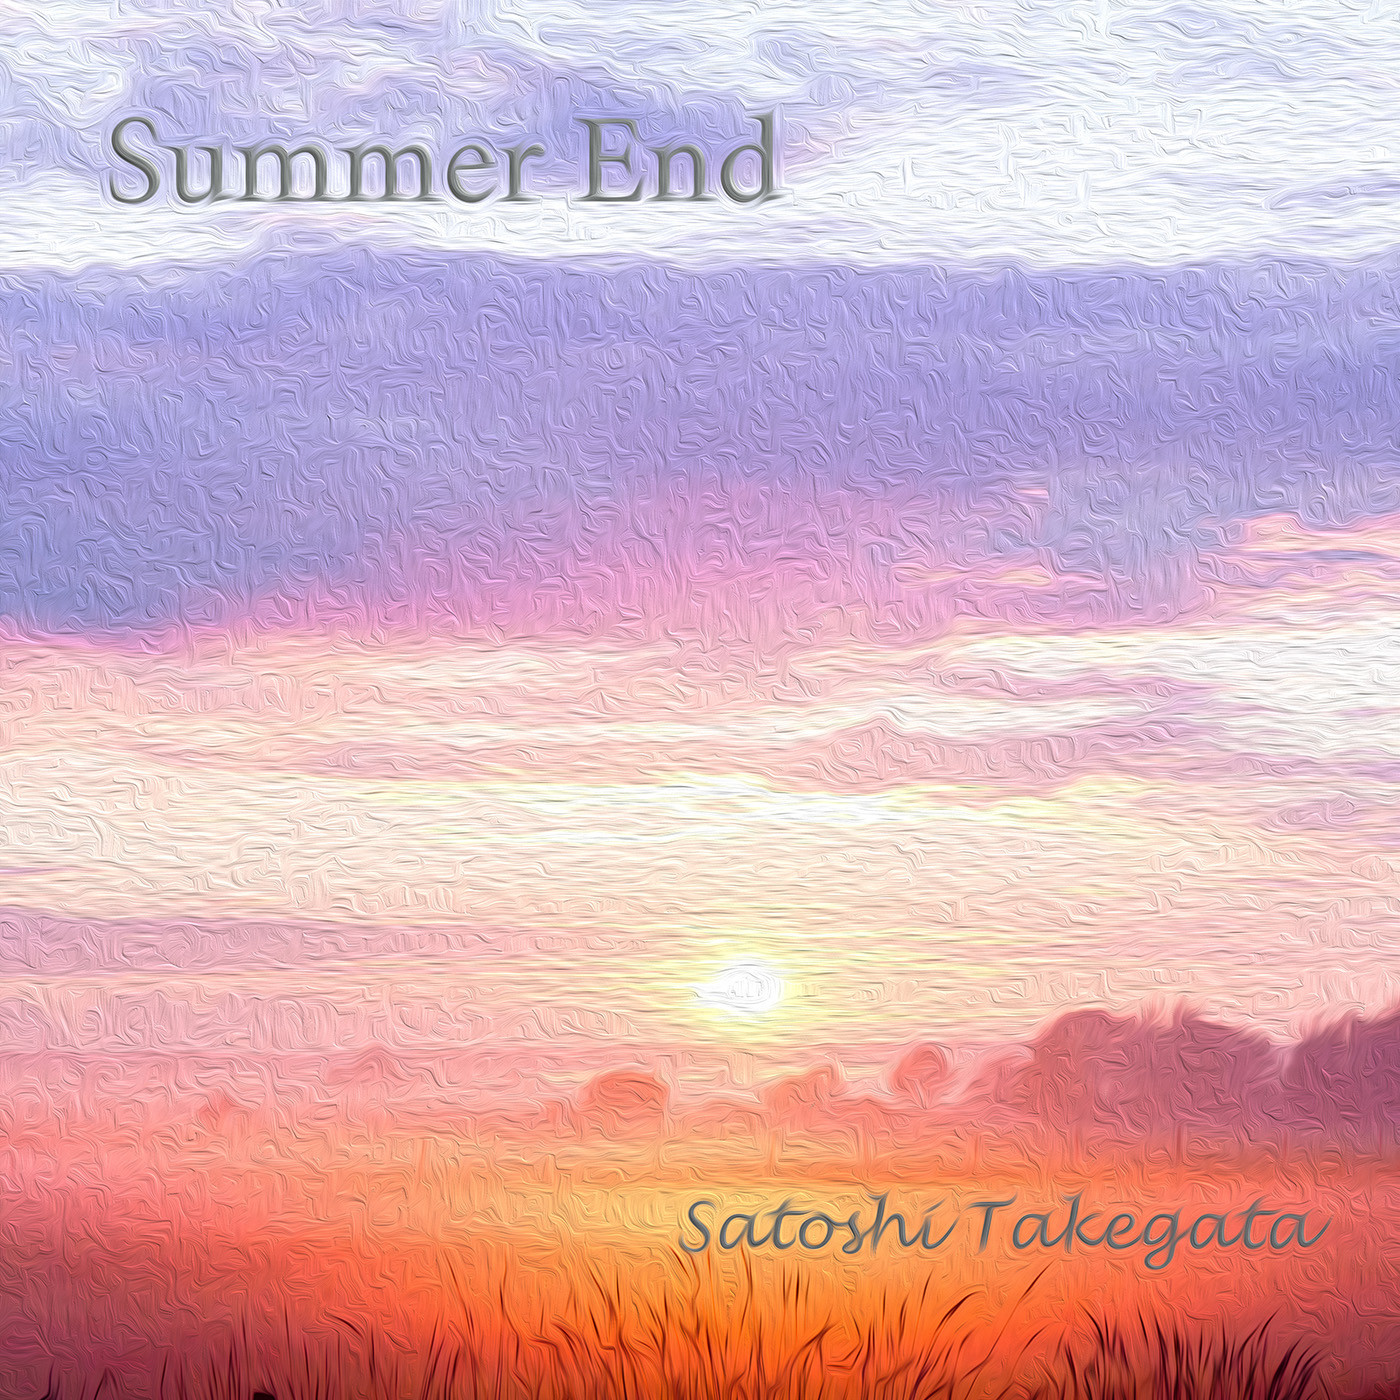 Summer End (花冠)